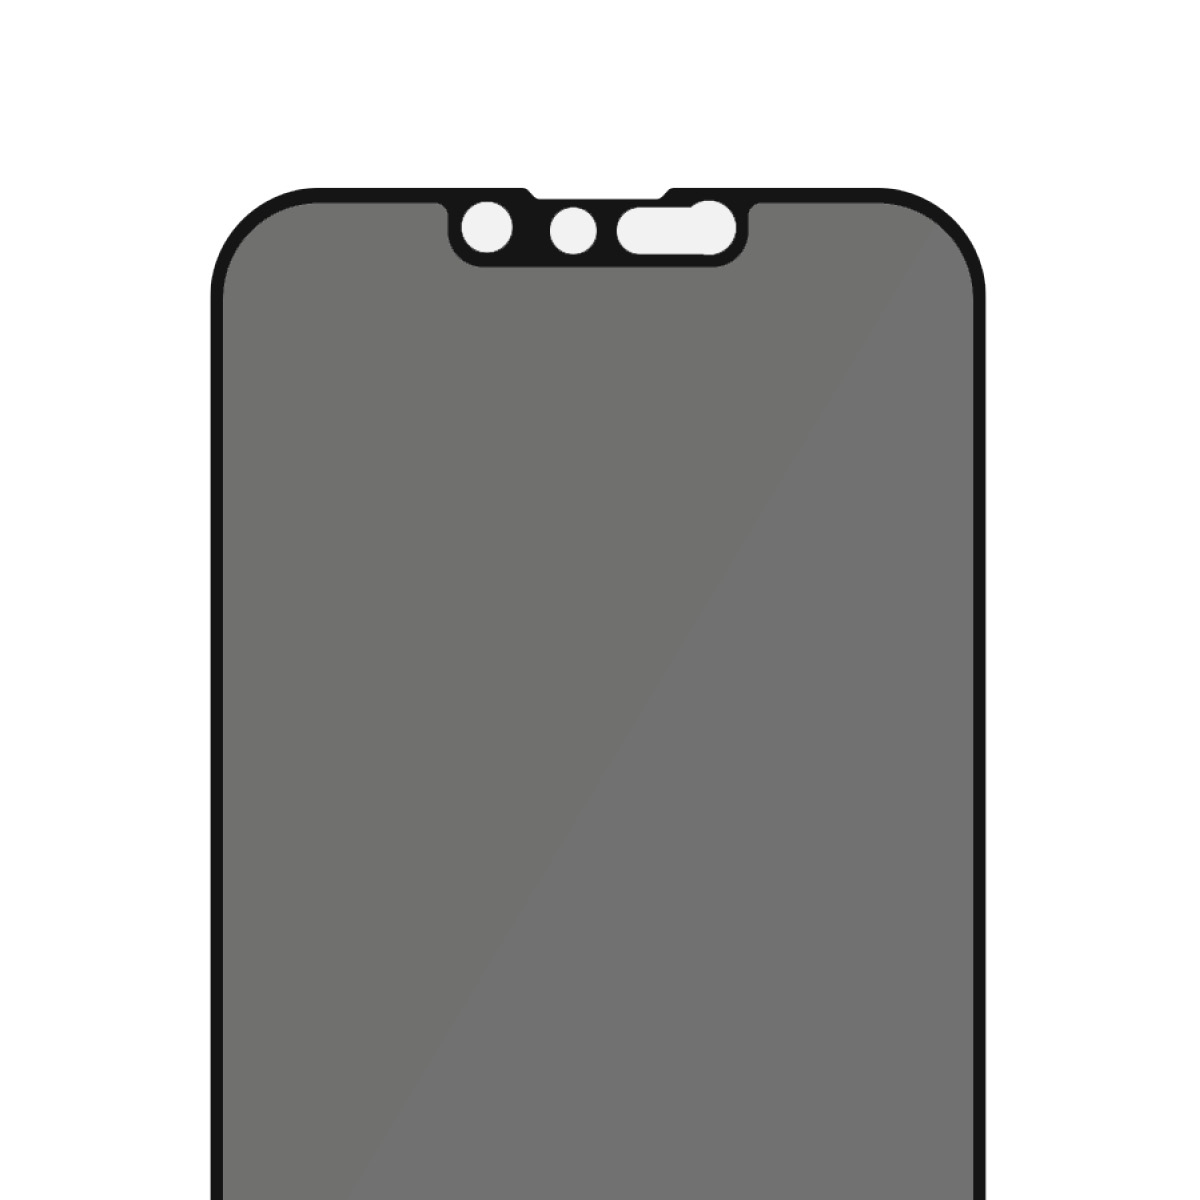 Folie de protectie PanzerGlass Apple iPhone 13 Mini | De la margine la margine thumb